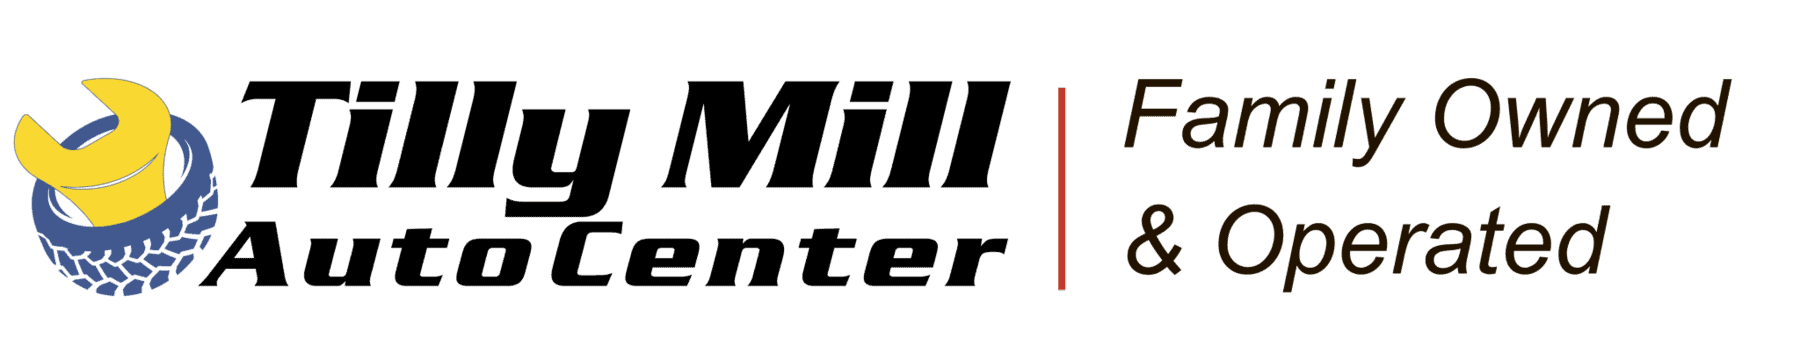 Tilly Mill Auto Center | Trusted Customer